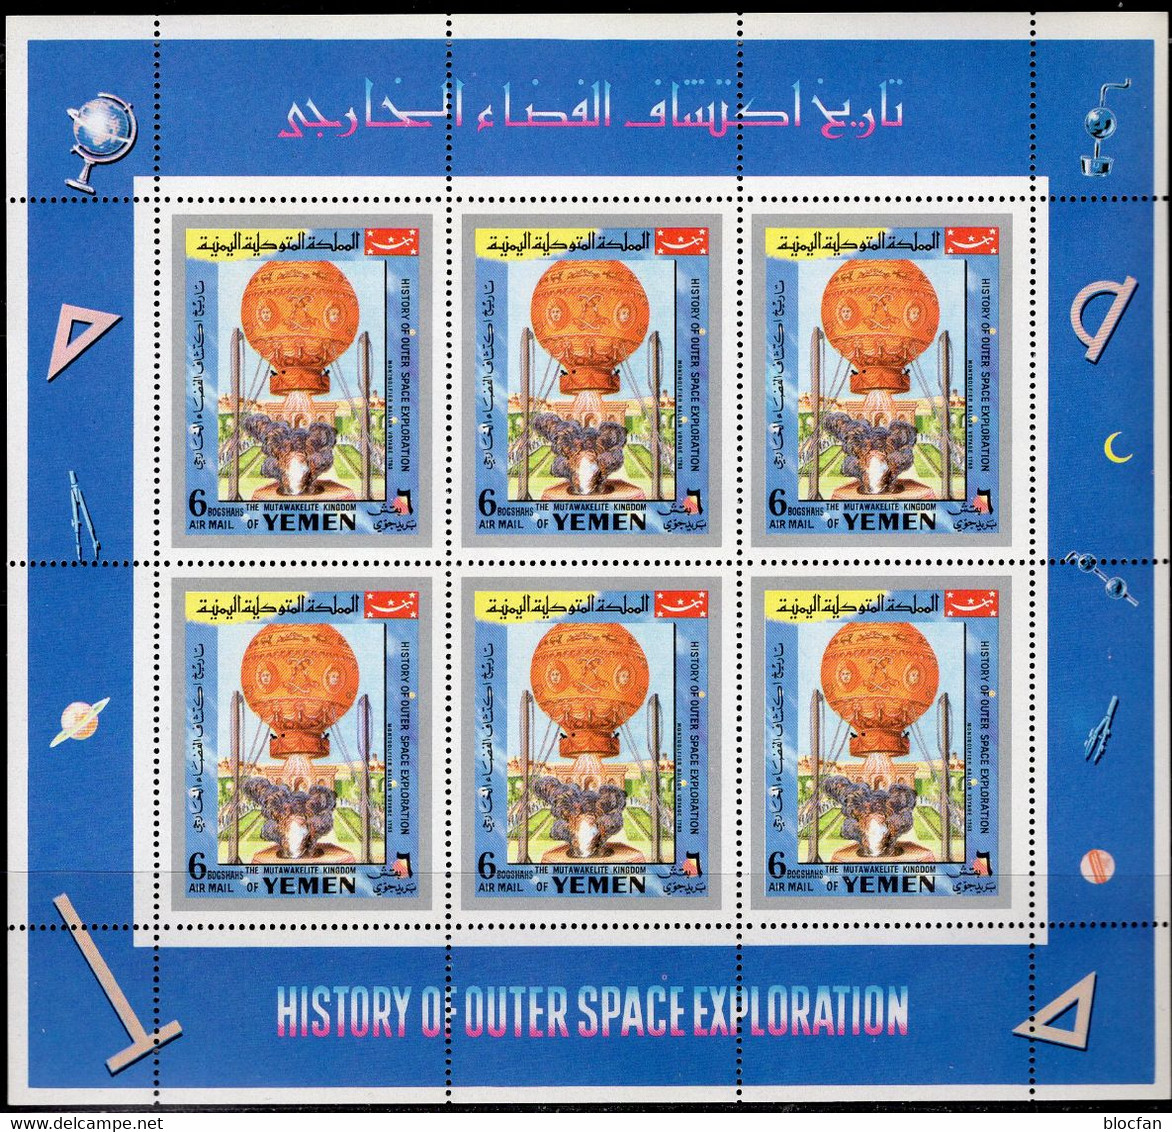 Ballon-Fahrt Jemen 864 Kleinbogen ** 6€ Montgolfier 1783 History Space Exploration Sheetlet M/s Bloc Sheet Bf Yemen - United States